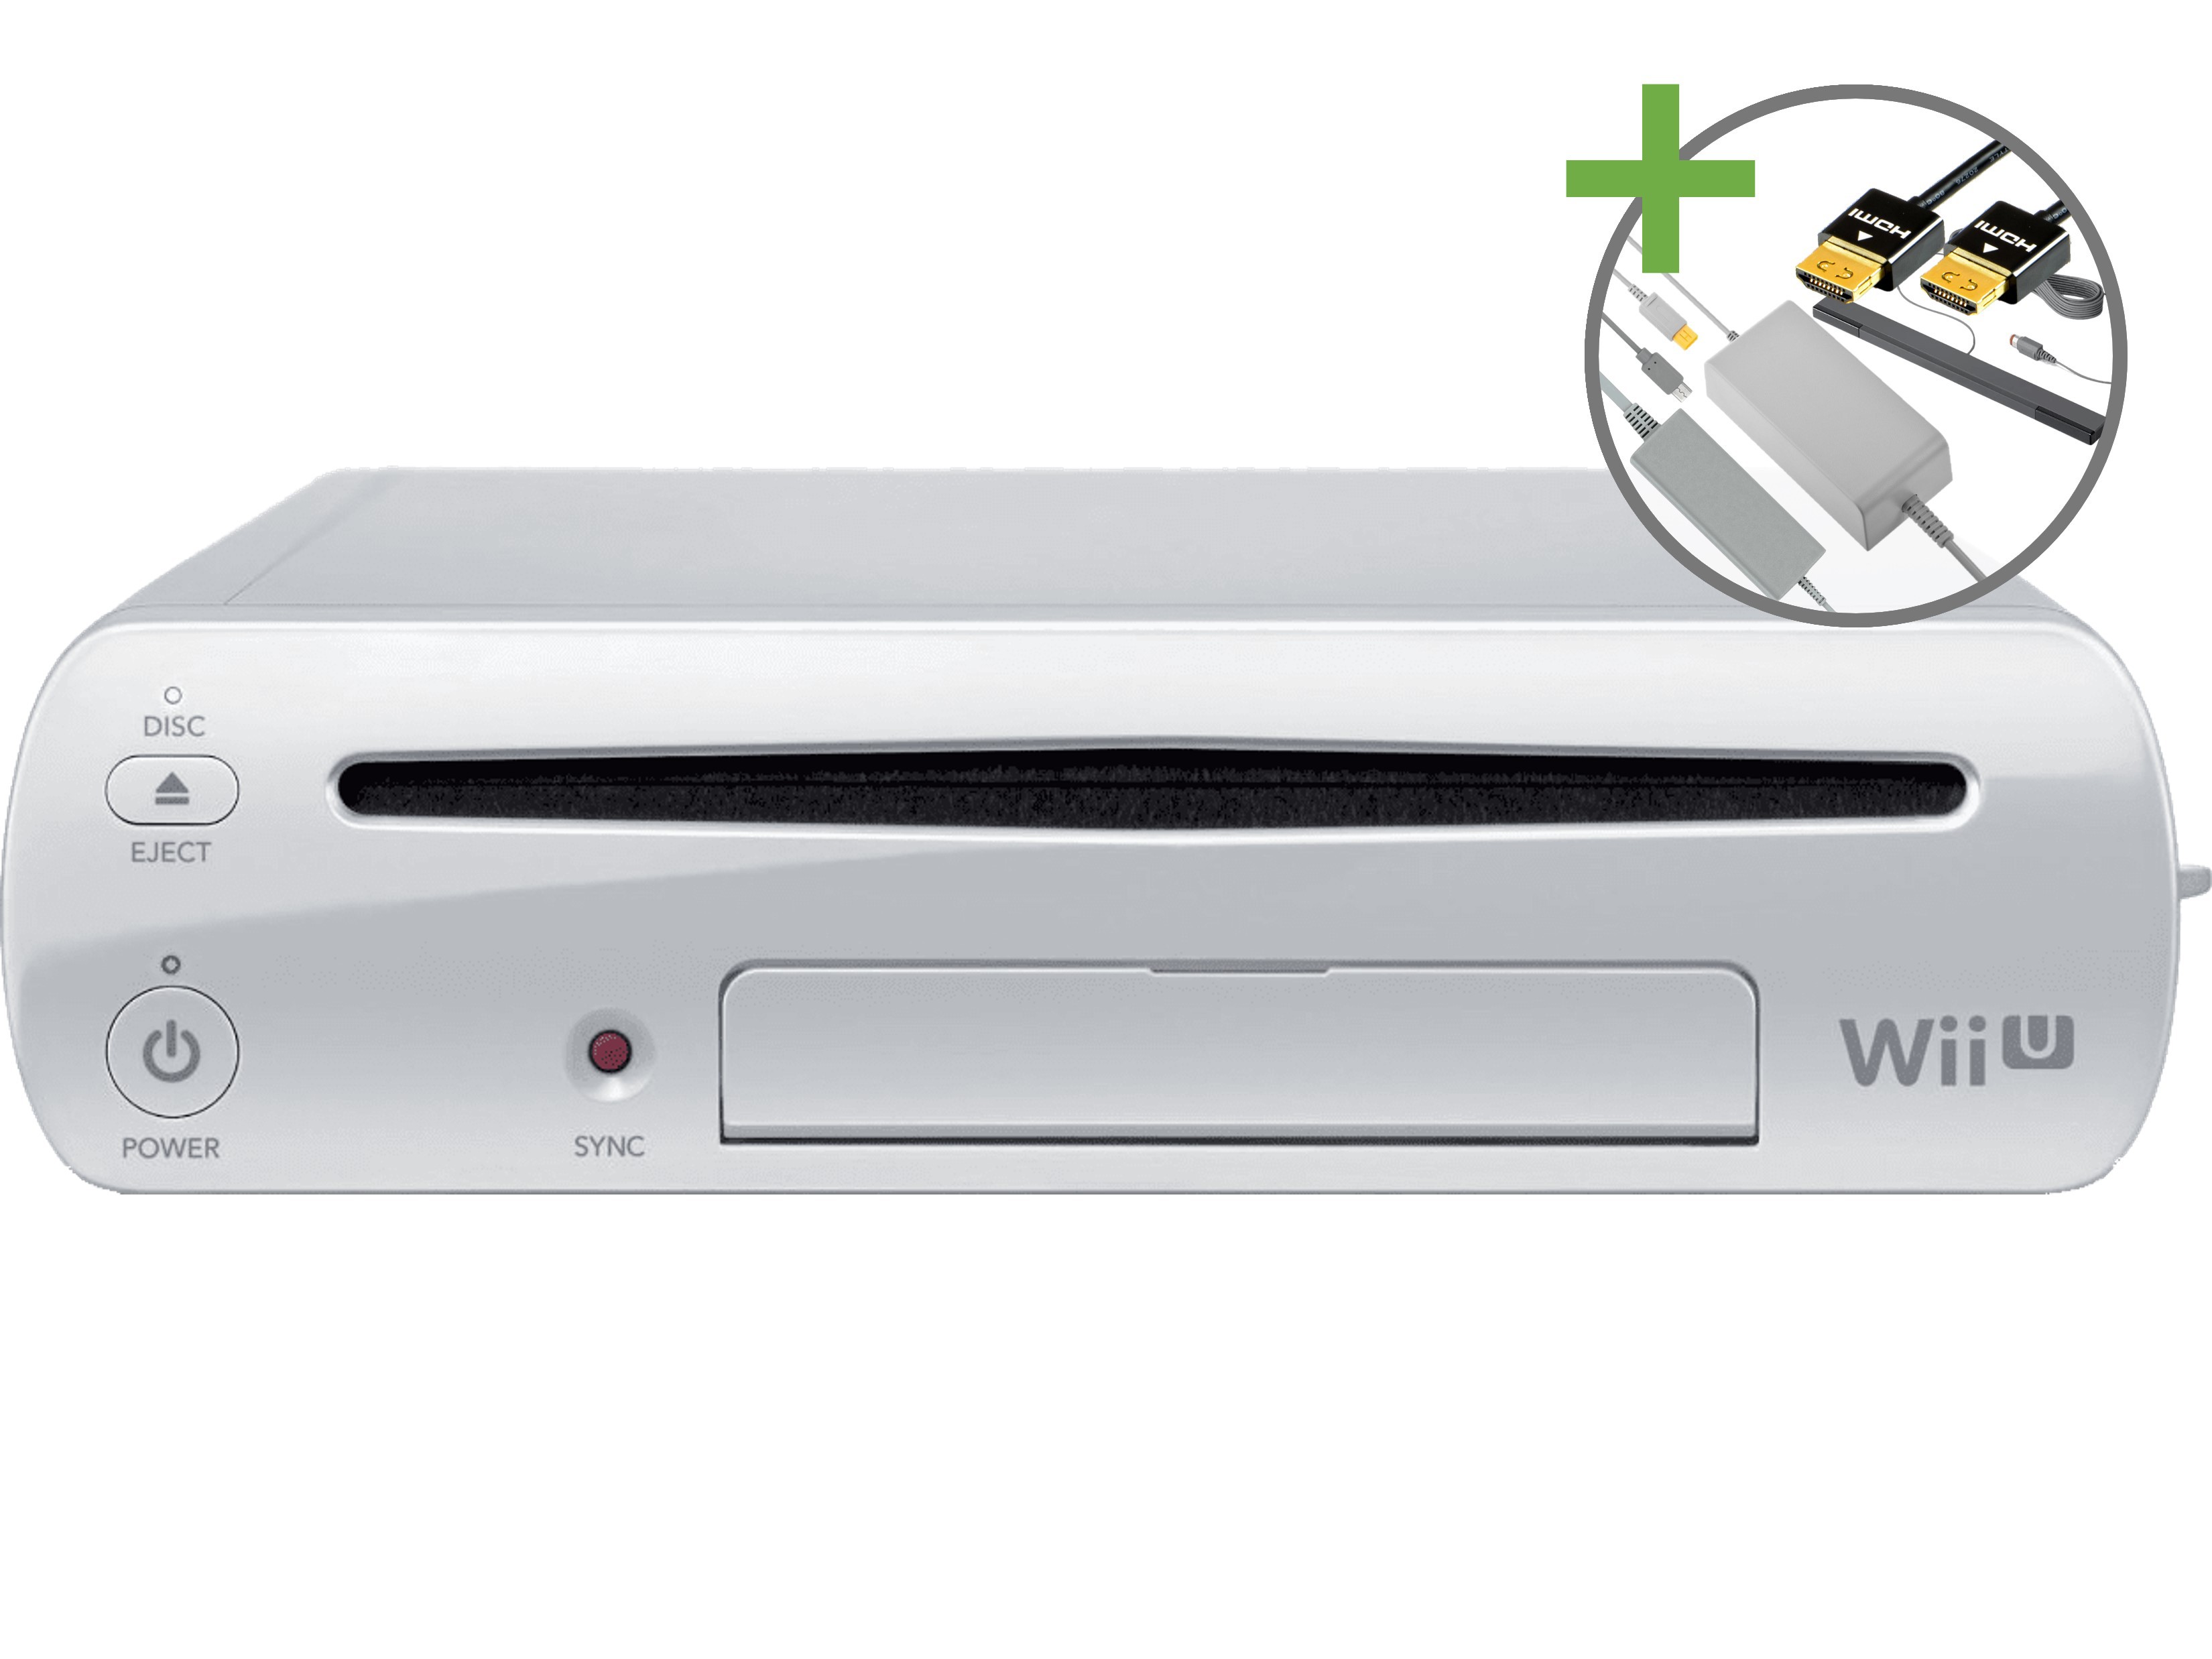 Nintendo Wii U Starter Pack - Wii Party U Edition [Complete] - Wii U Hardware - 4